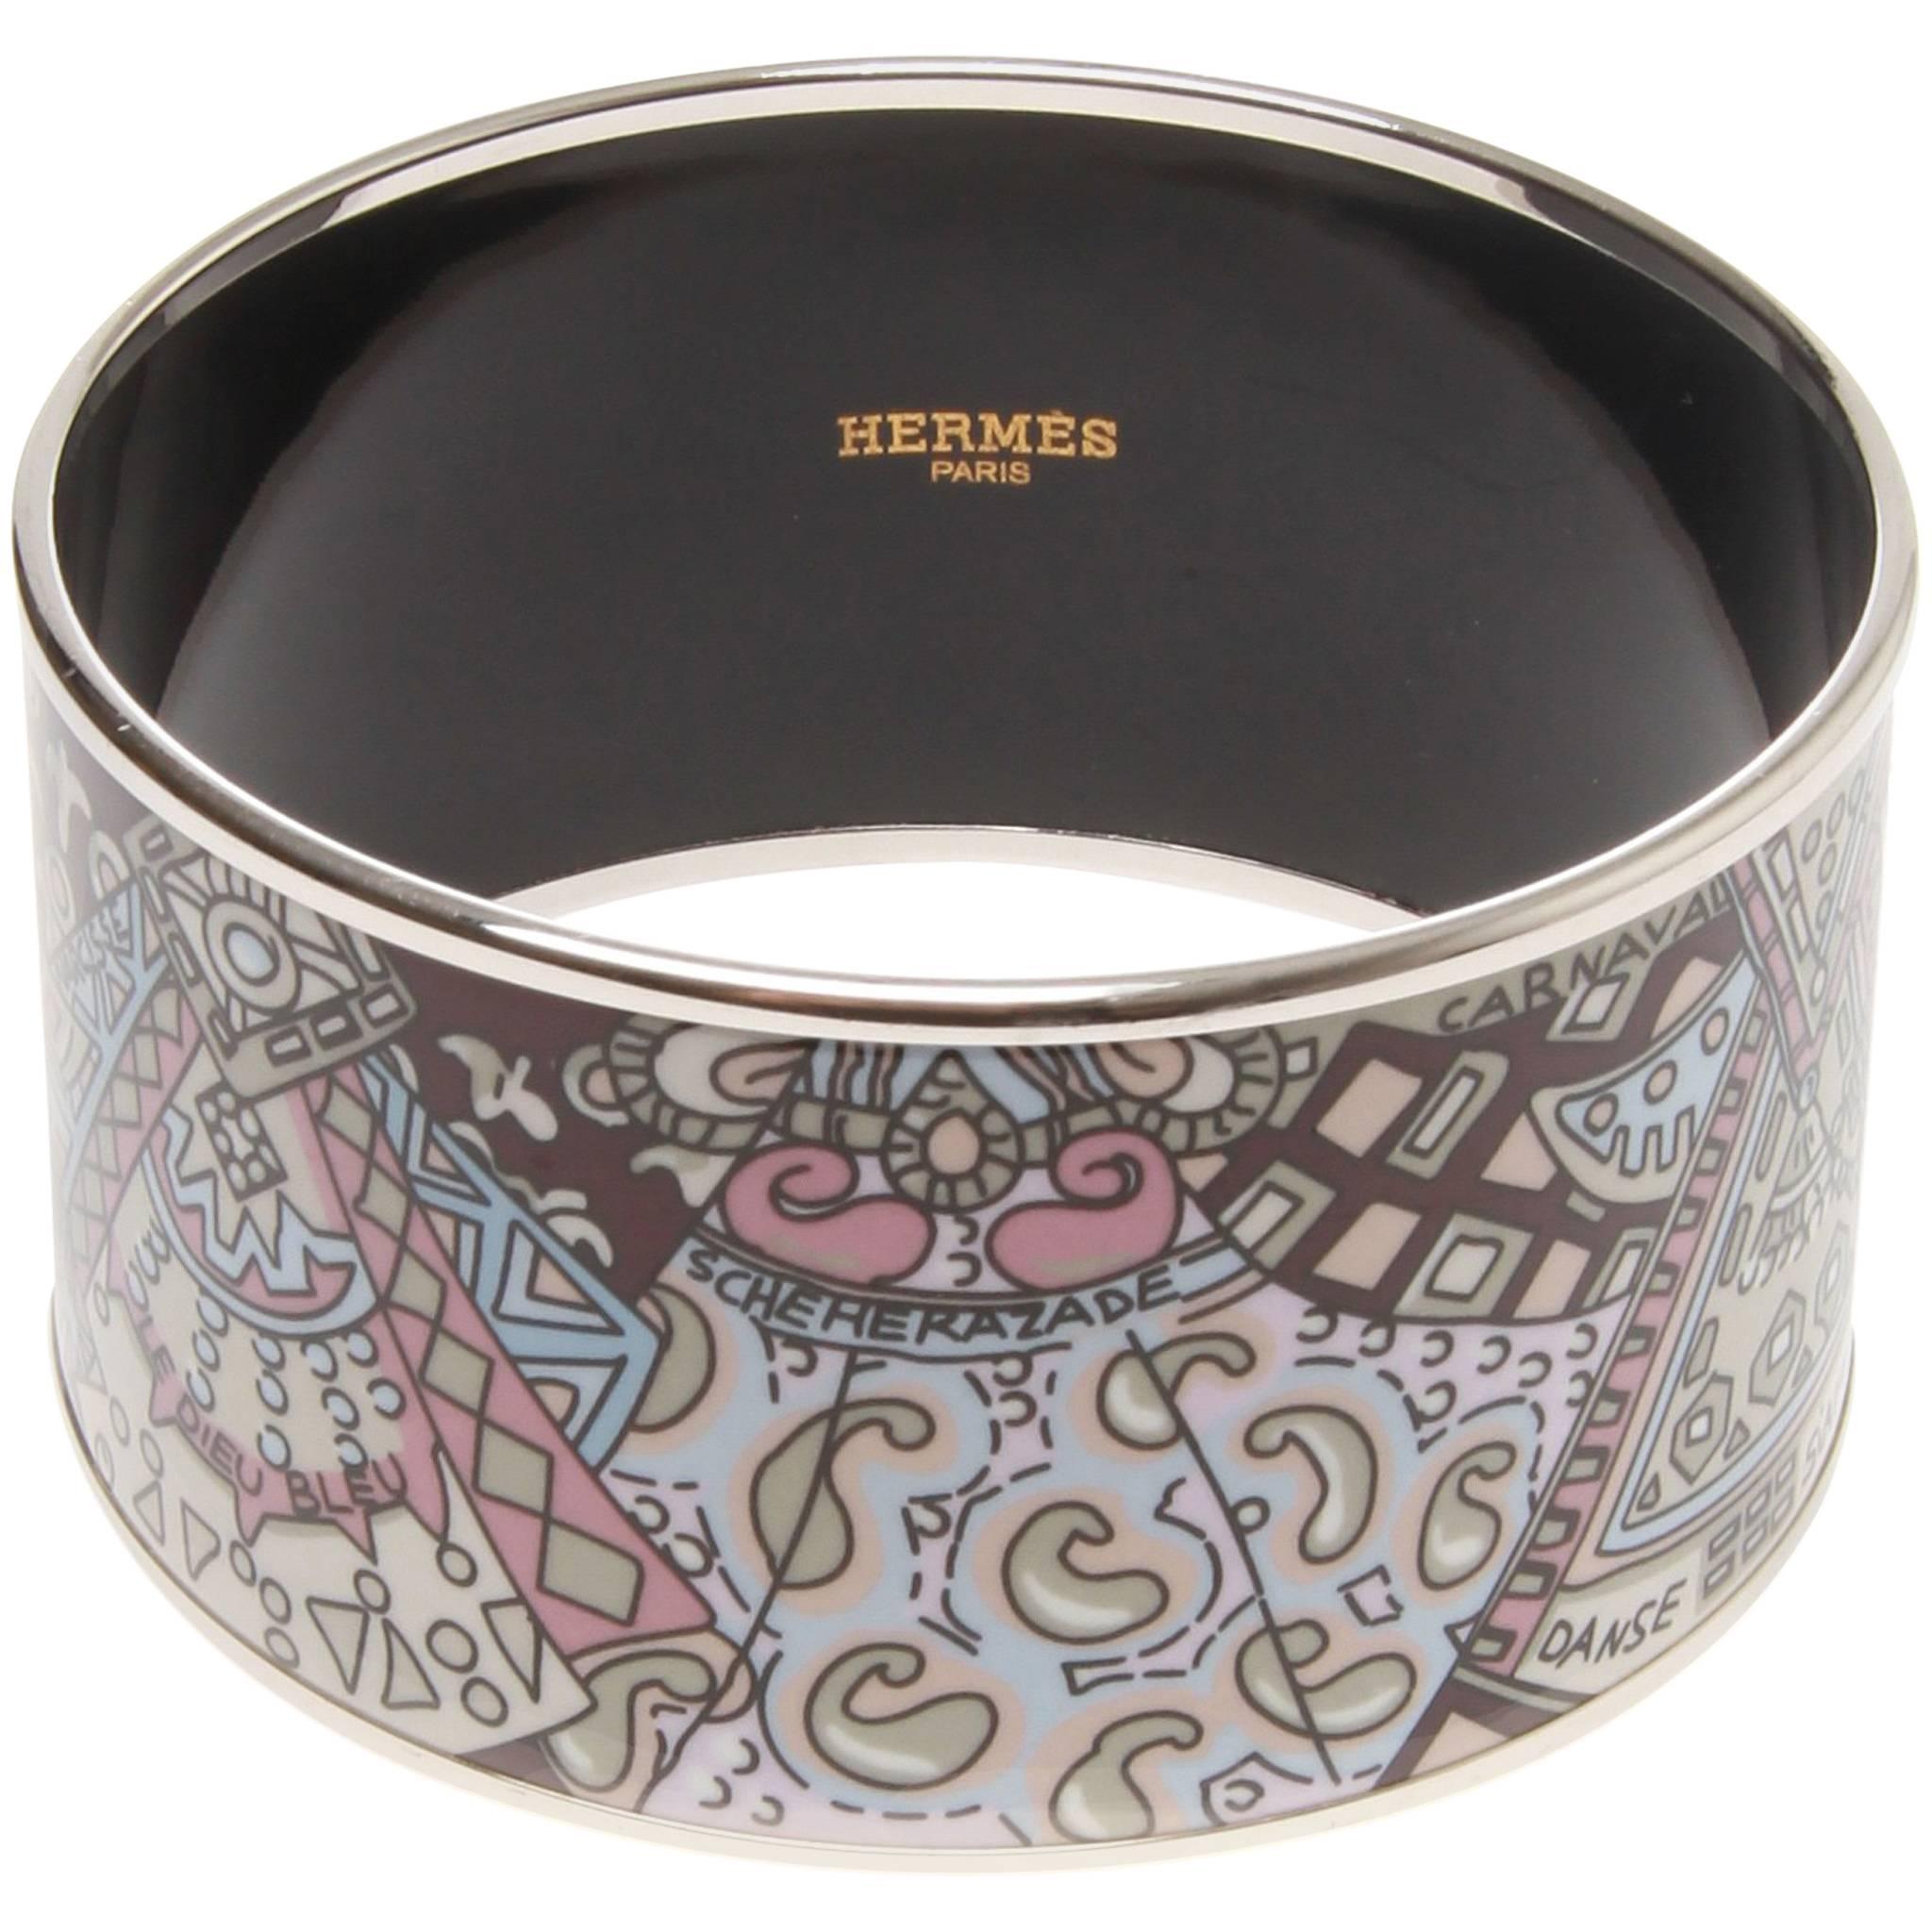 Hermes Extra Large printed enamel bracelet